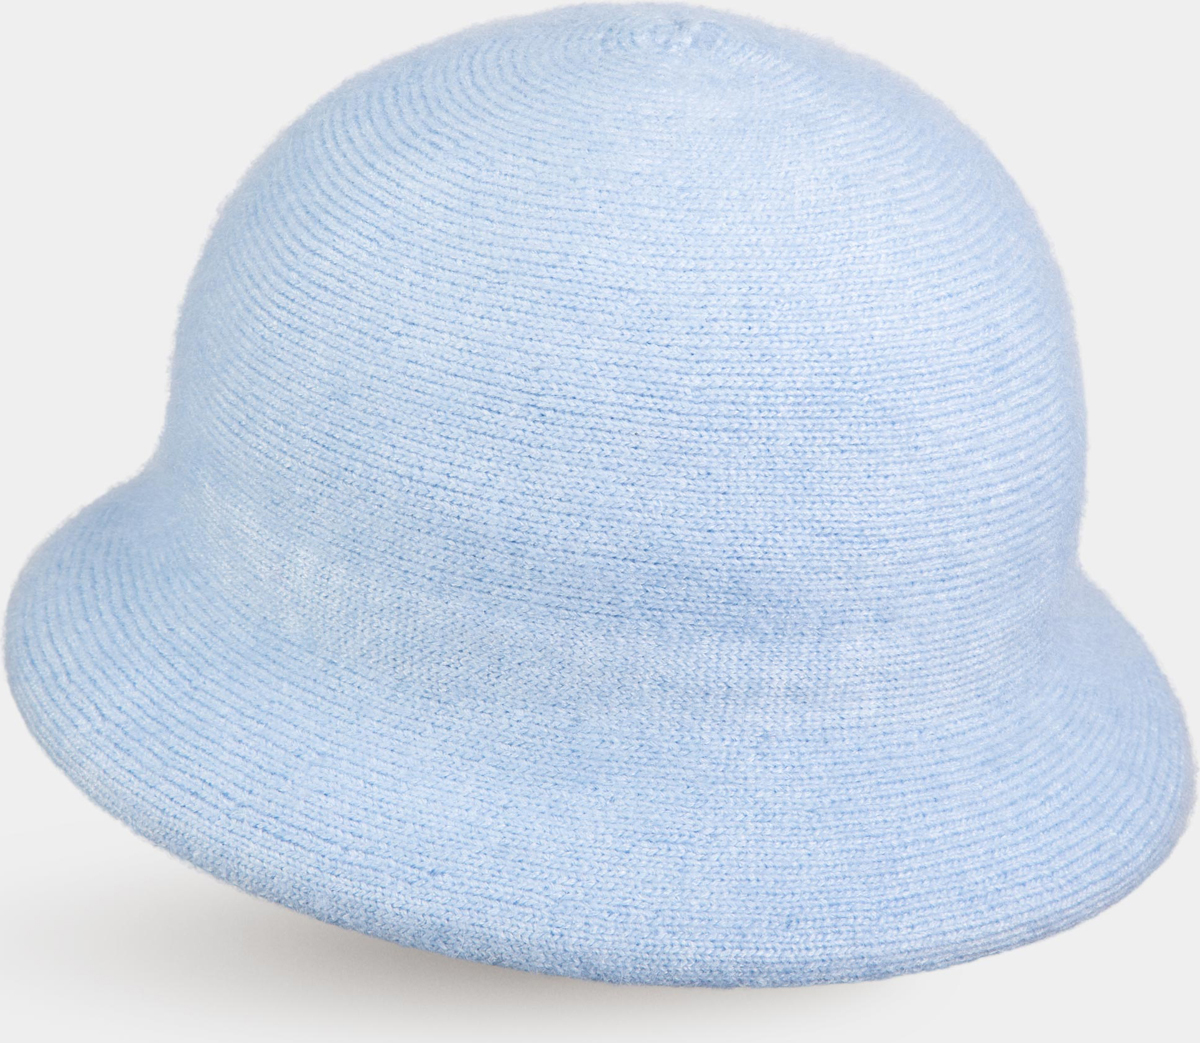 Шляпа женская Canoe Dolli, цвет: светло-голубой. 4846244. Размер 56/58